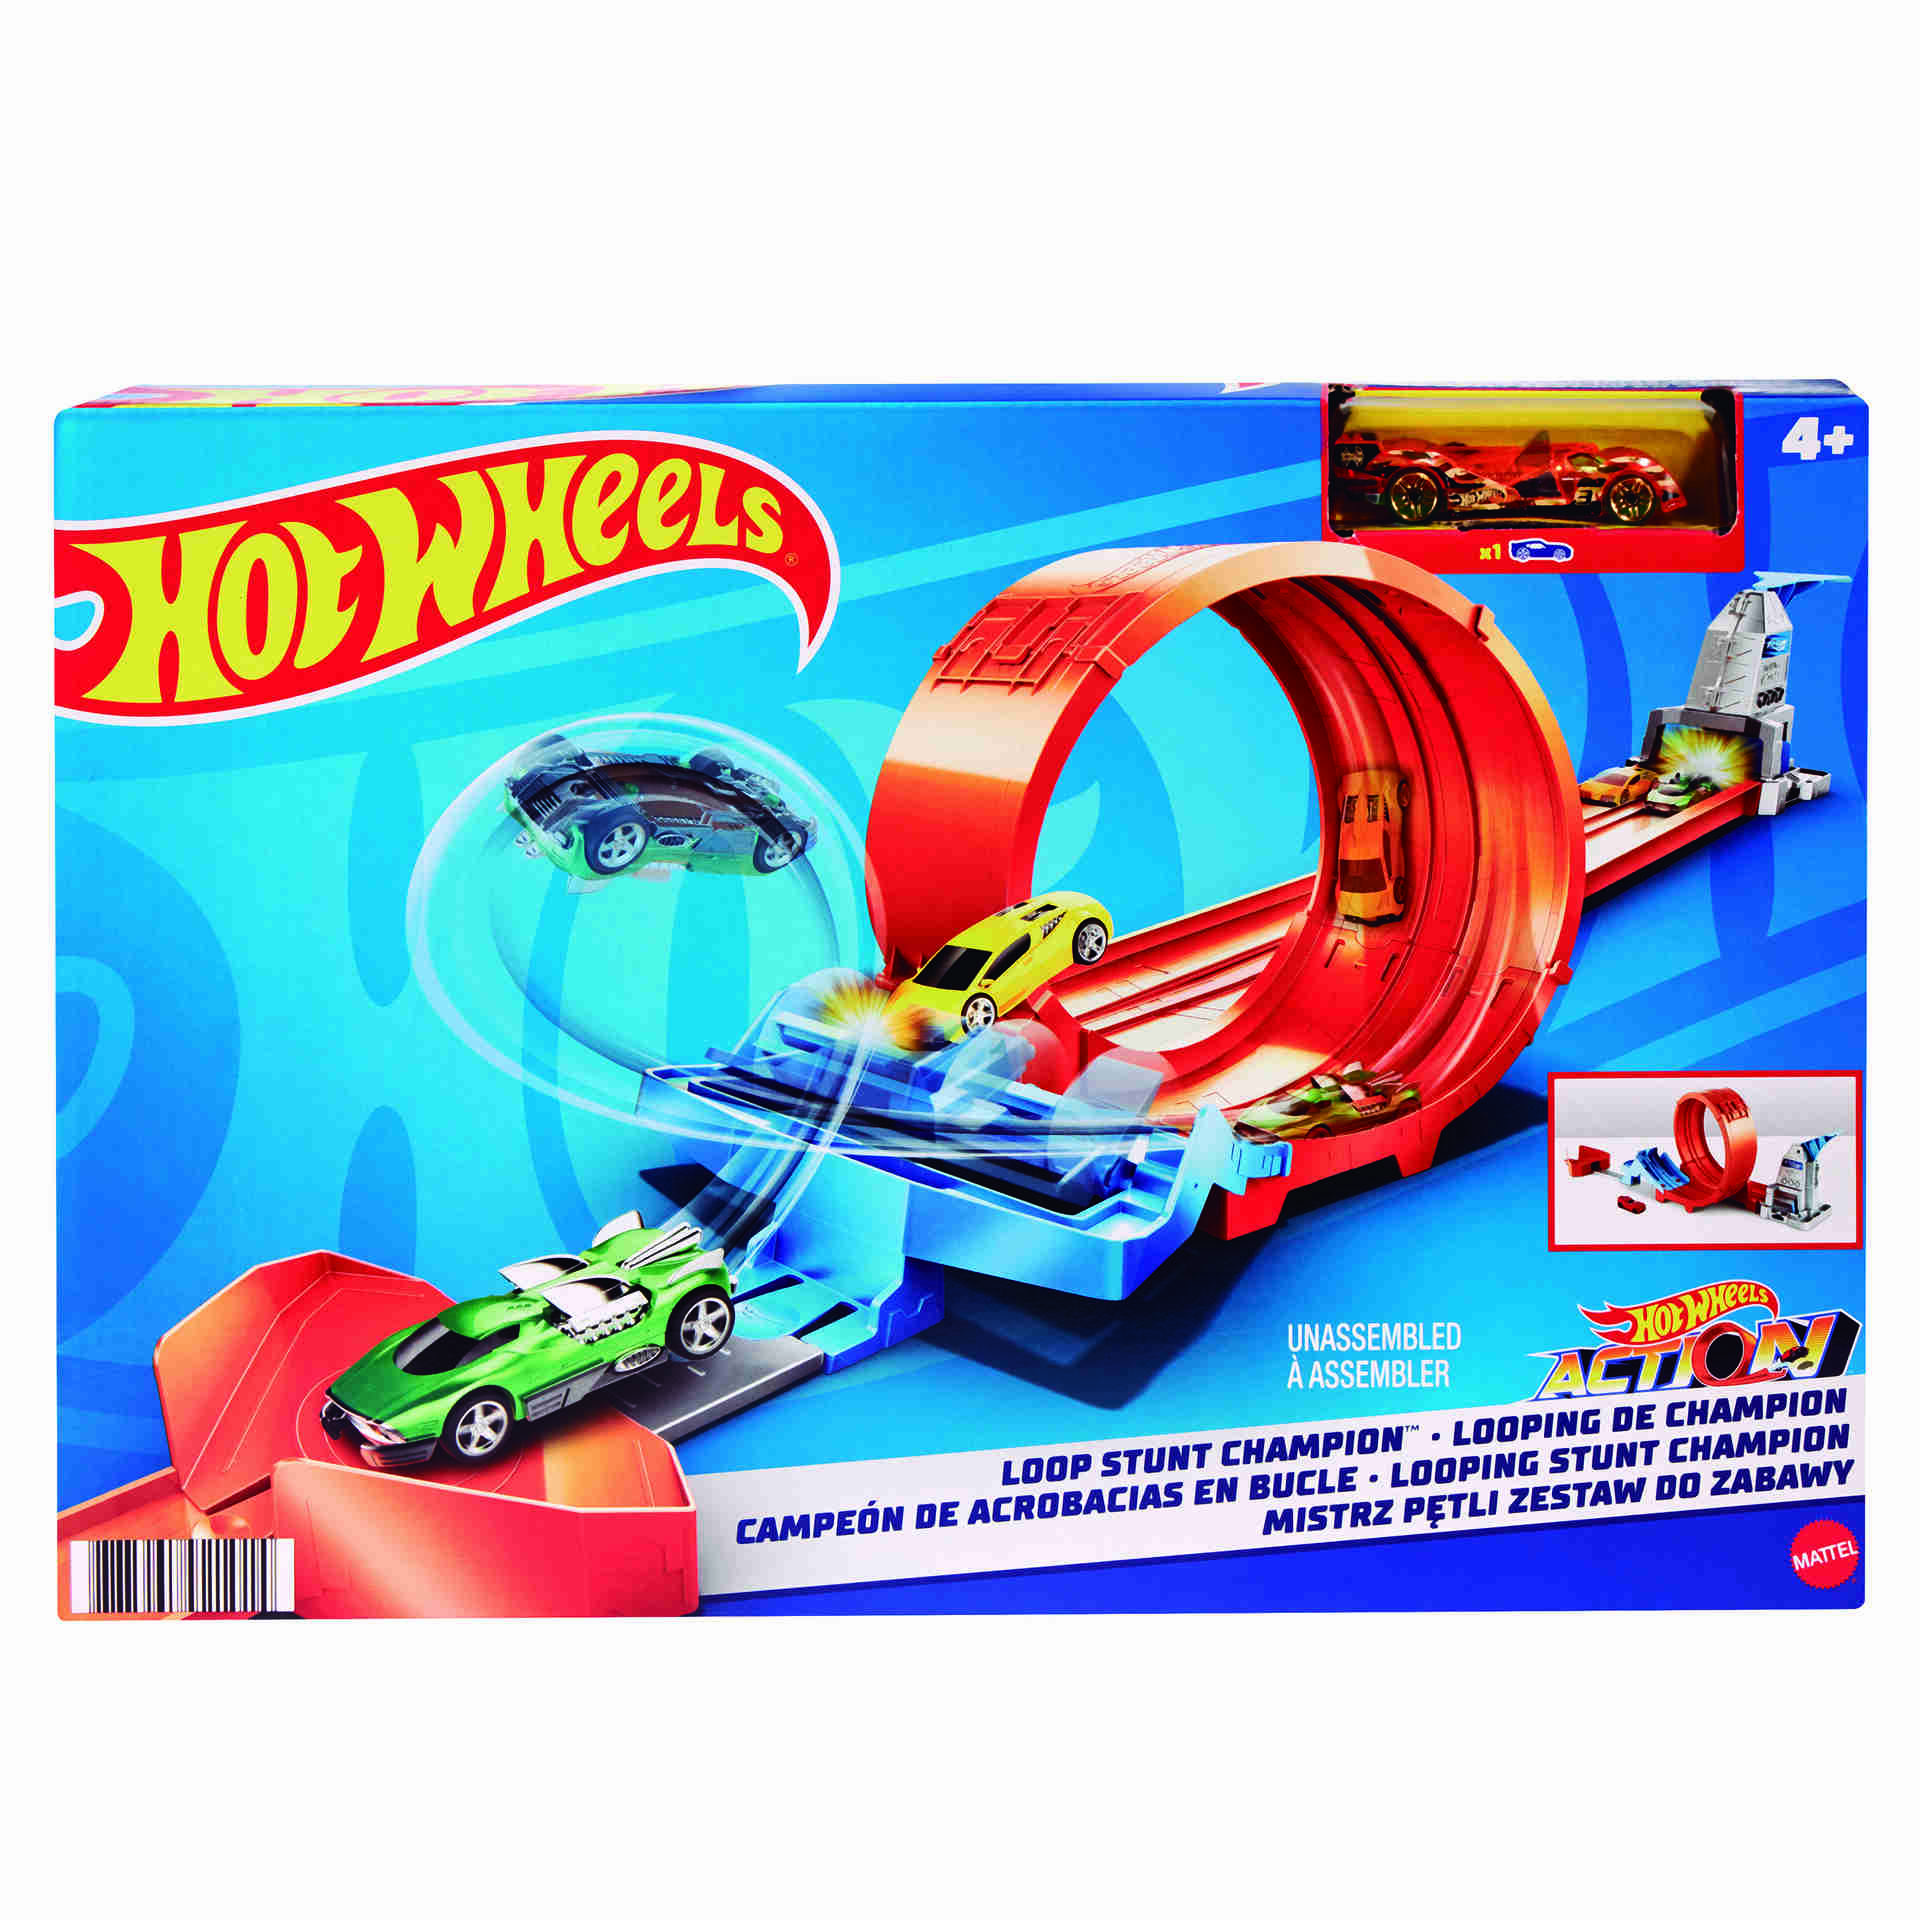 Hot Wheels Mattel - Carrinhos, Coleções, Pistas, Vídeos de Hotwheels